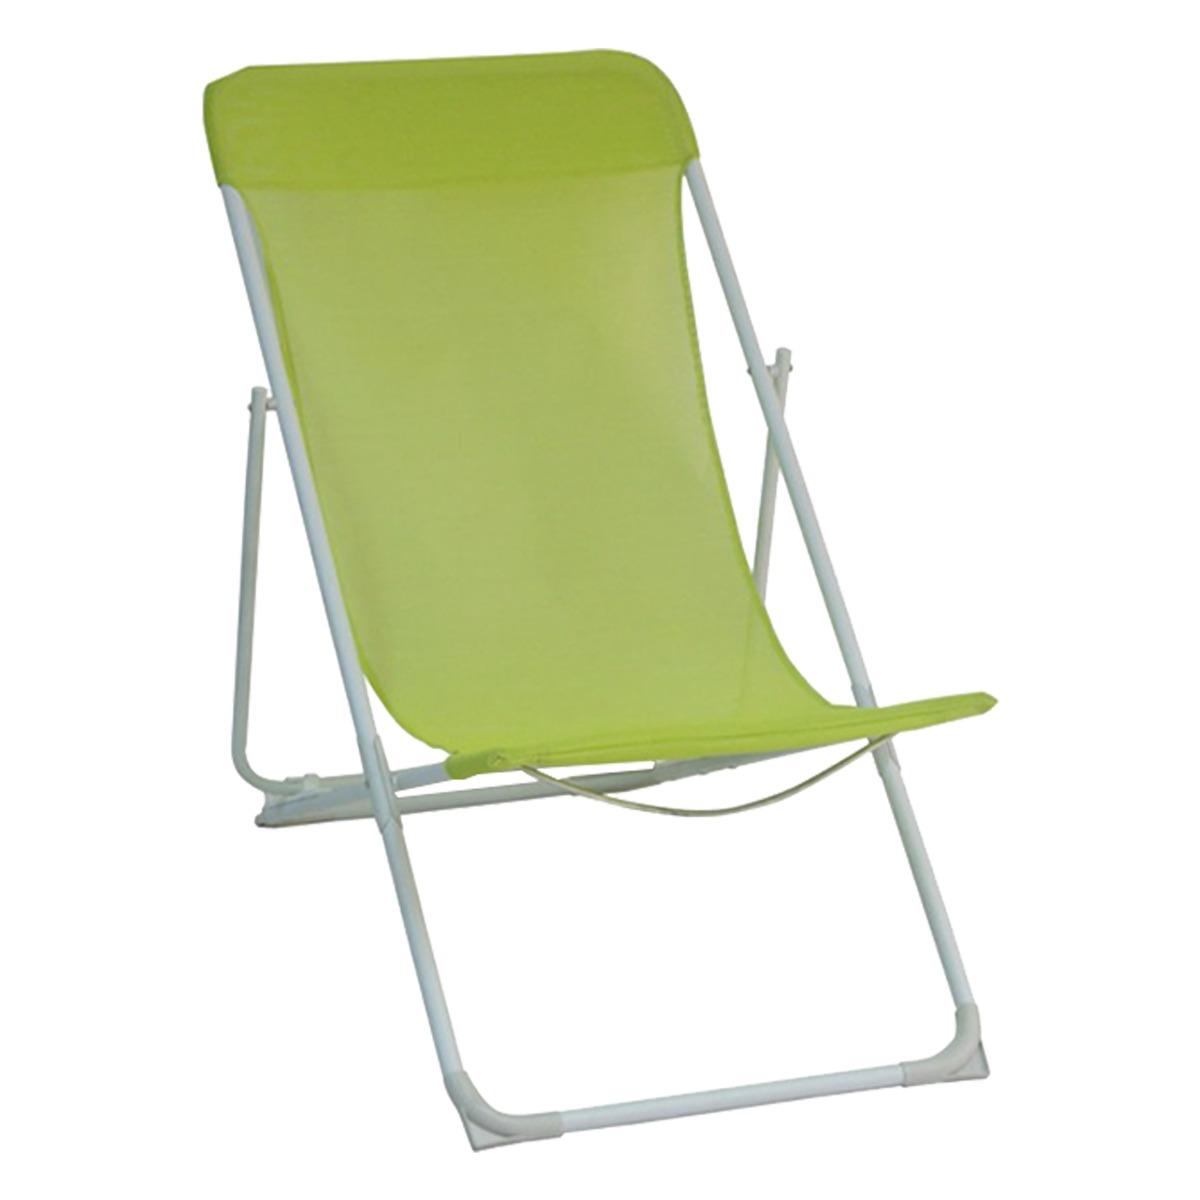 Chaise longue Mexico - 98 x 56 x H 35/75 cm - vert